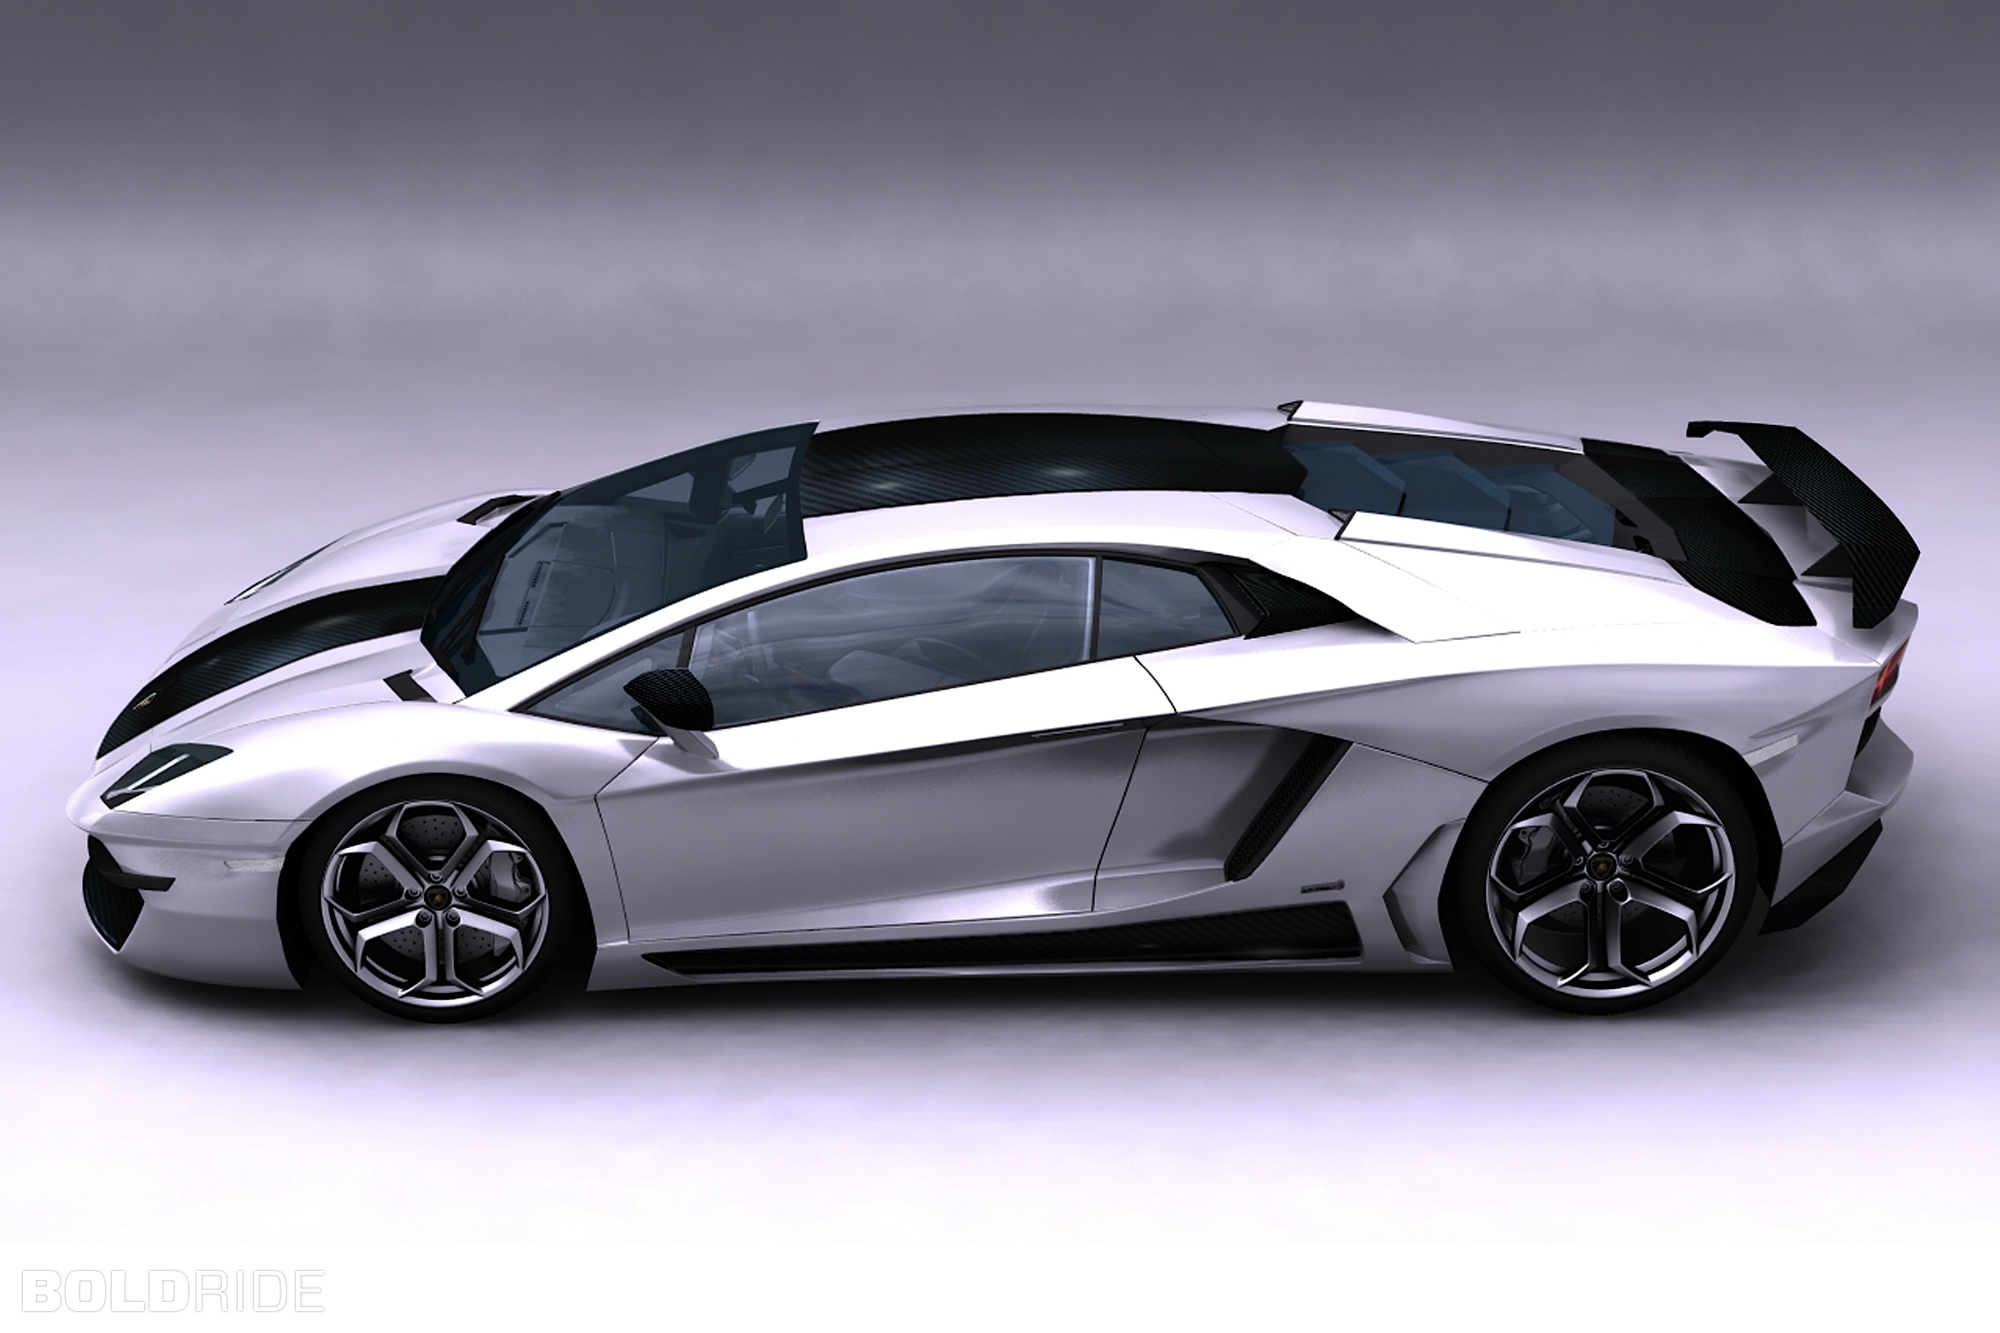 2012, Prindiville, Lamborghini, Aventador, Lp700 4, Supercar, Supercars Wallpaper